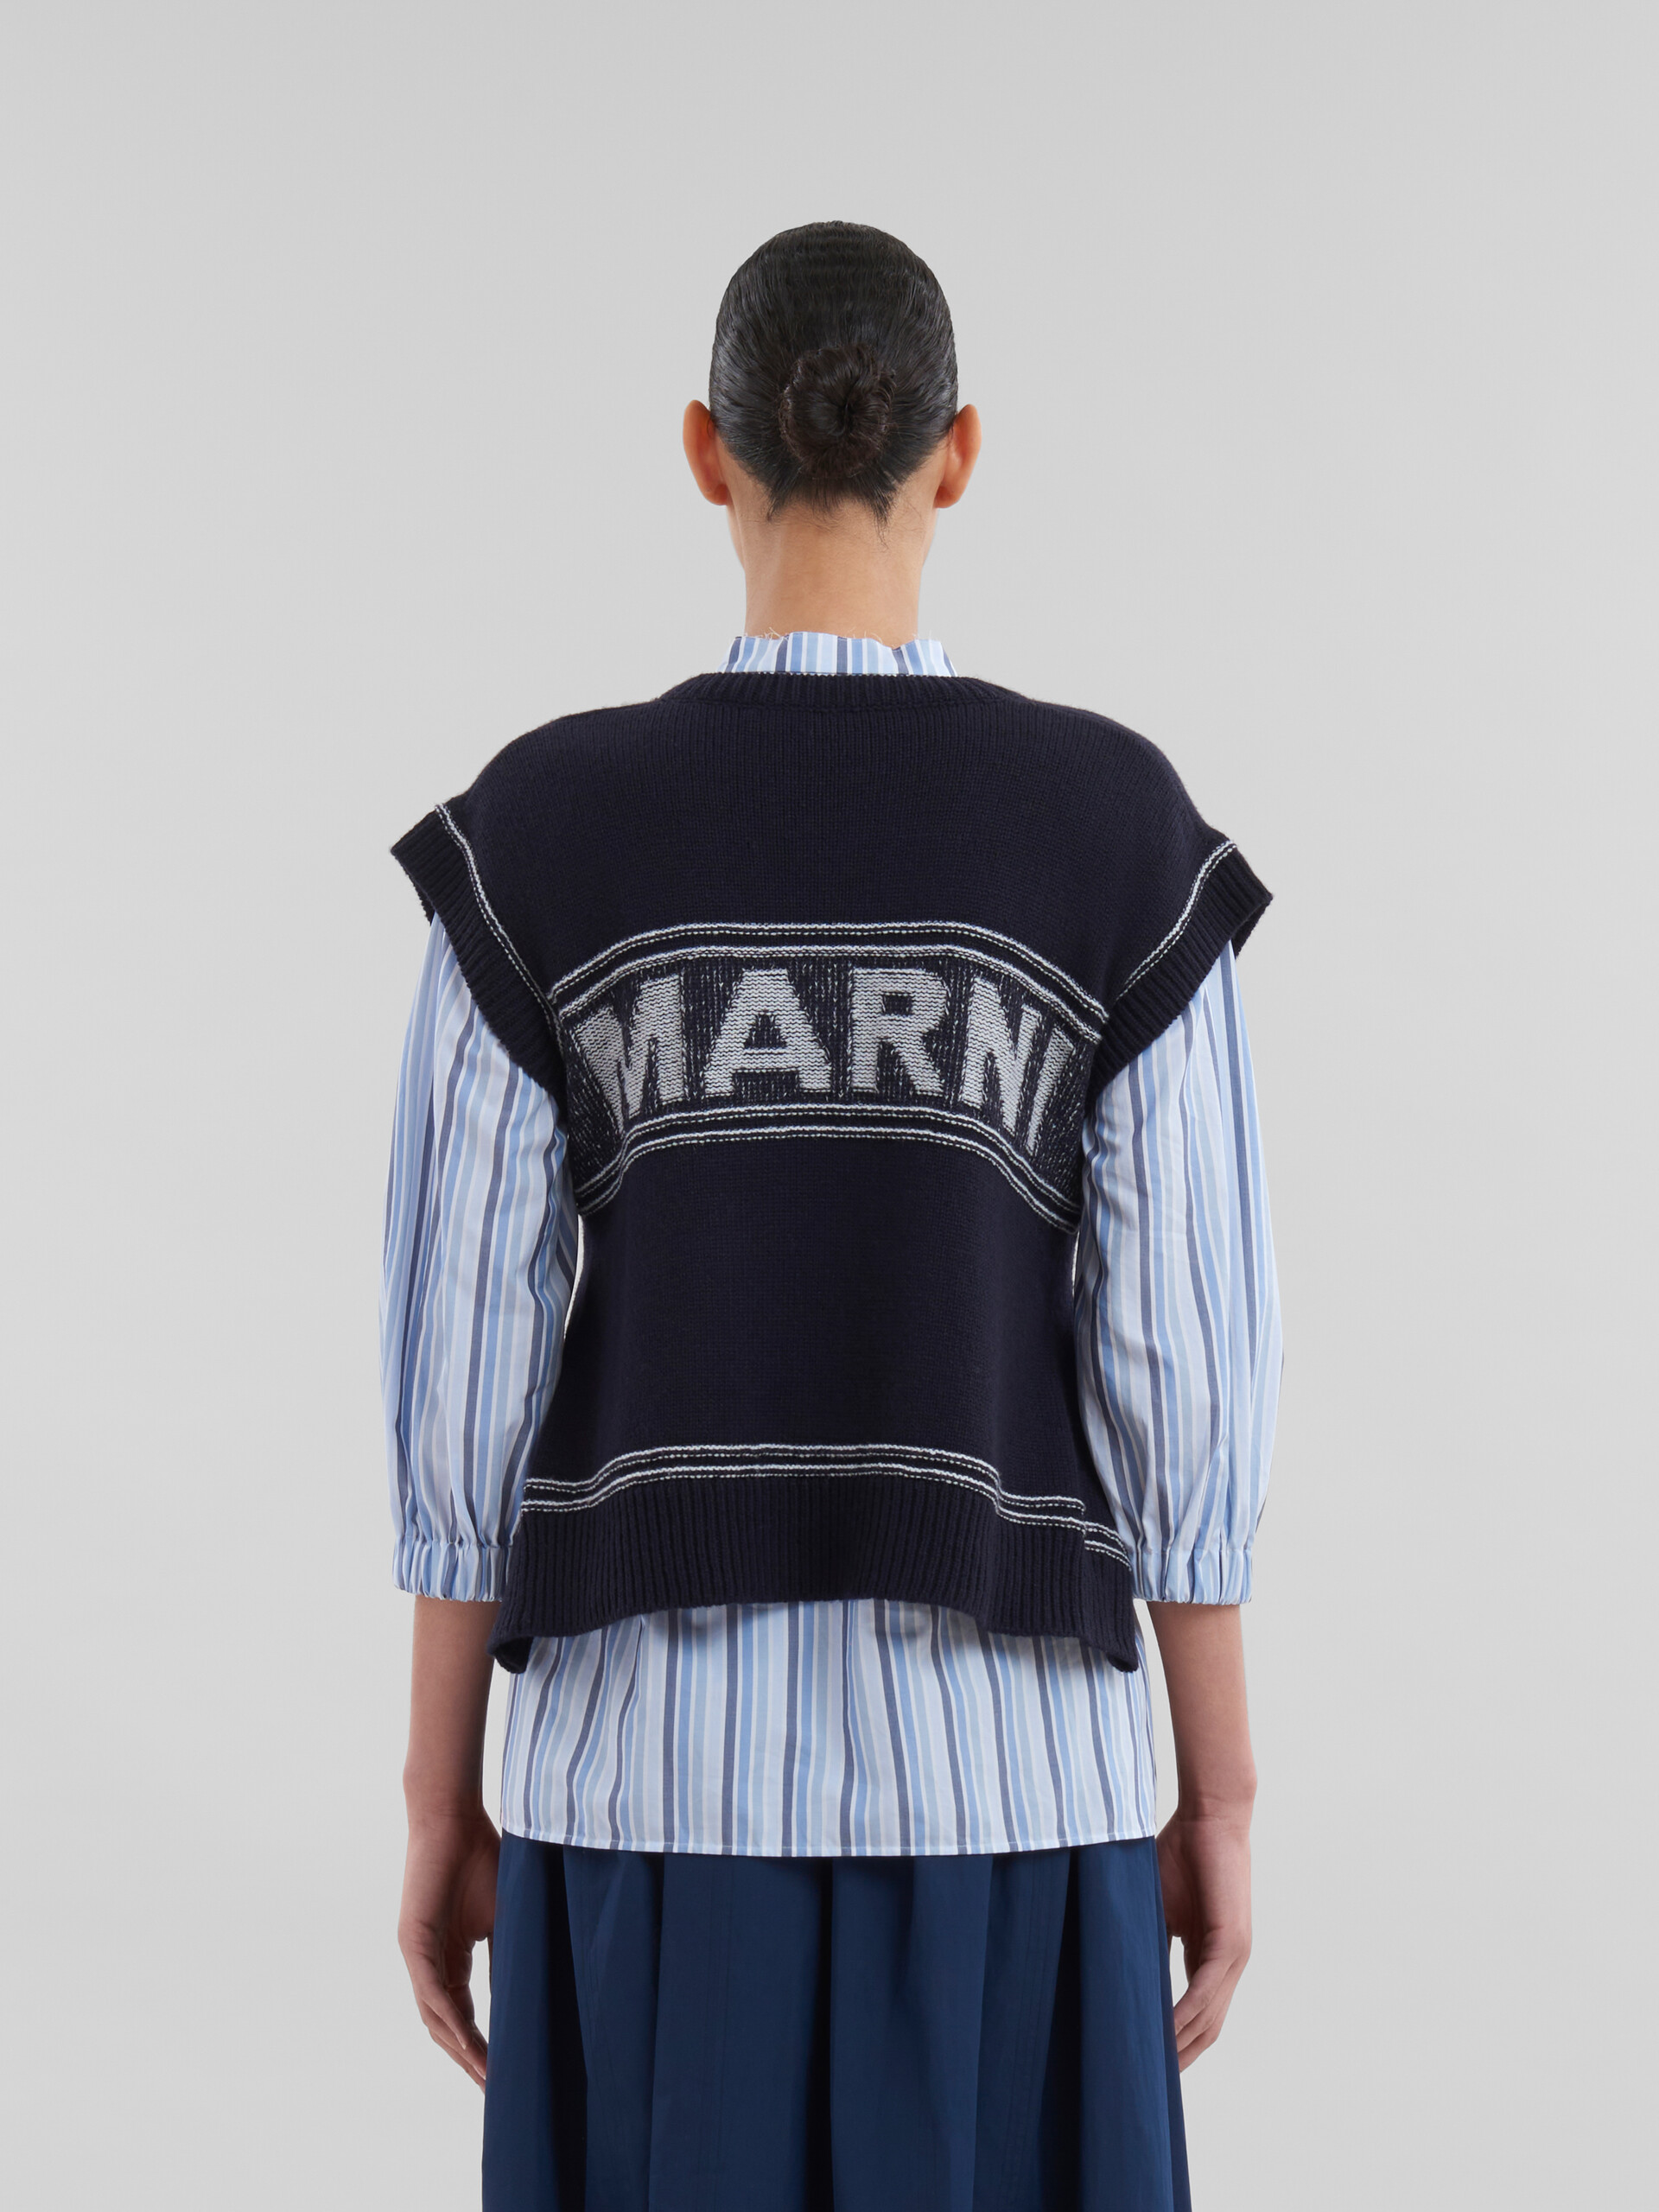 Gilet en laine vierge bleu marine avec « Marni » en intarsia - pulls - Image 3